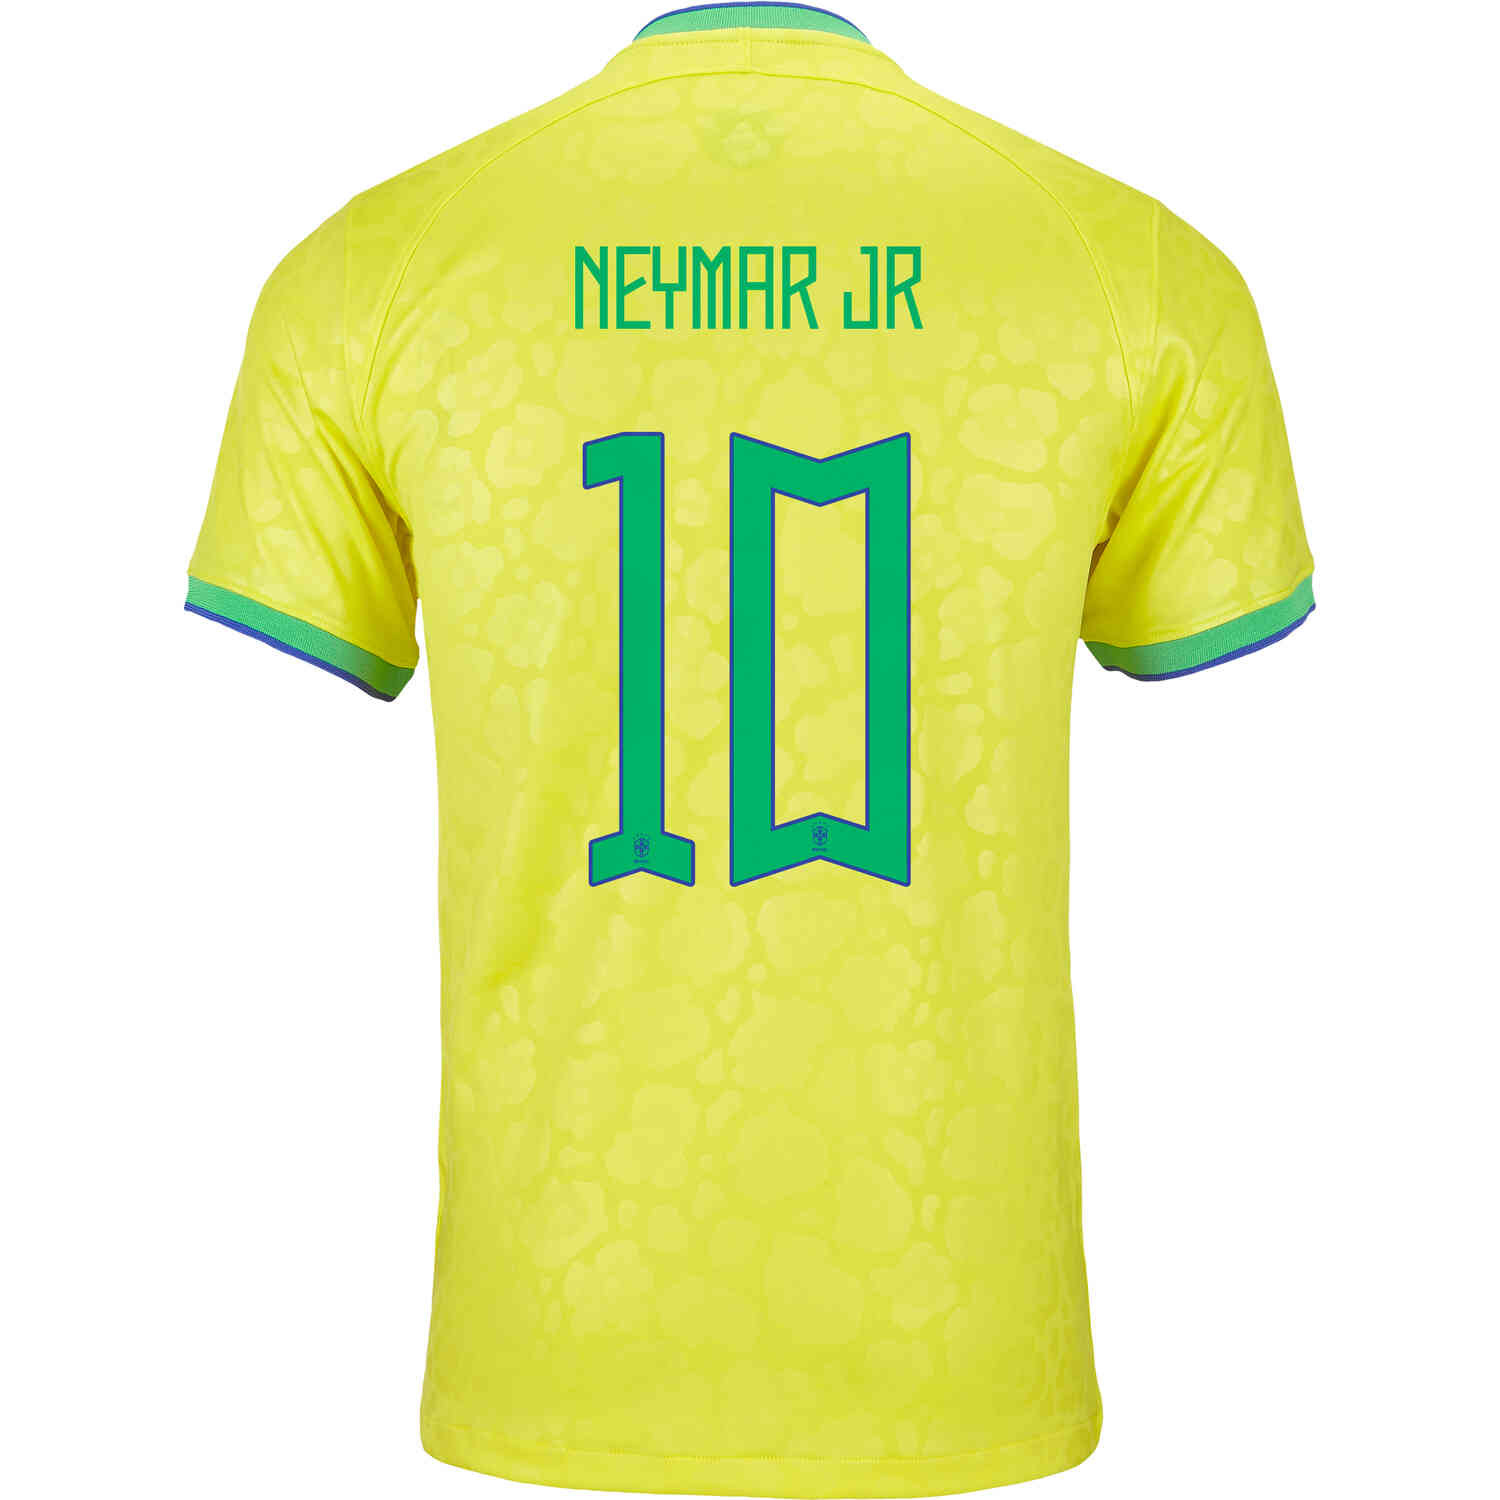 Nike Jr Brazil Home Jersey SoccerPro